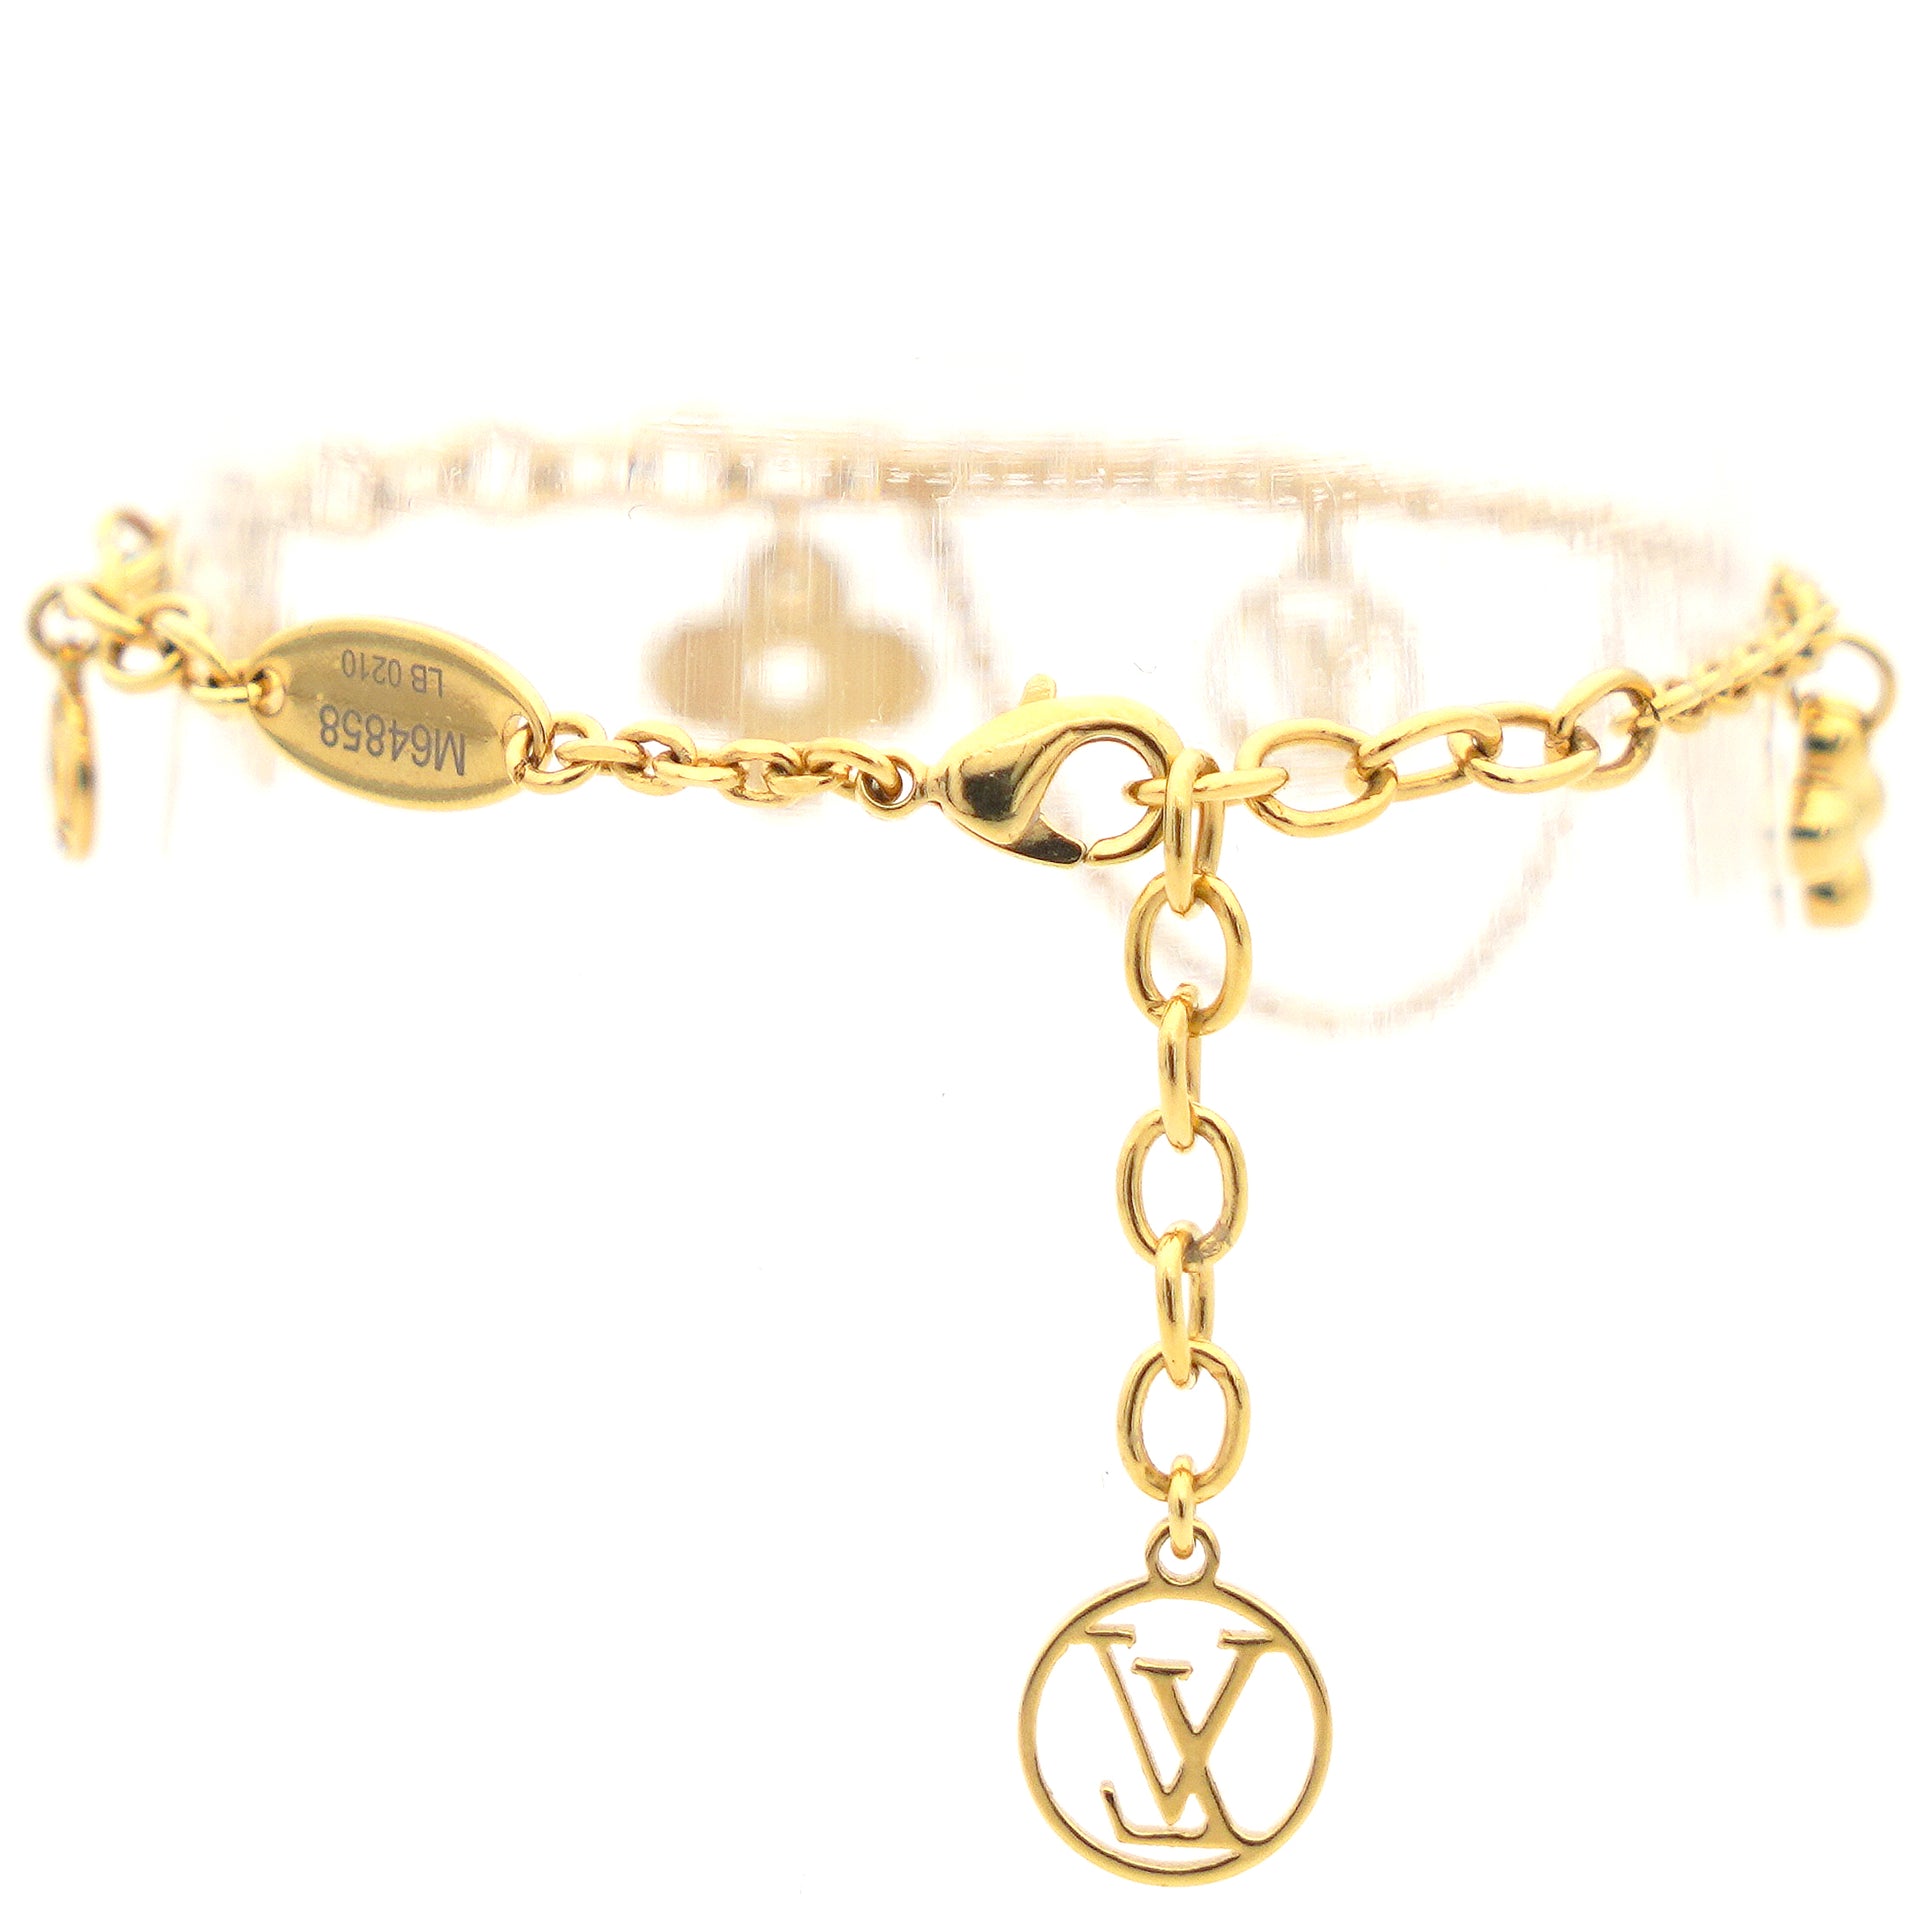 Authentic Louis Vuitton M64858 Blooming Flower Chain Bracelet Gold